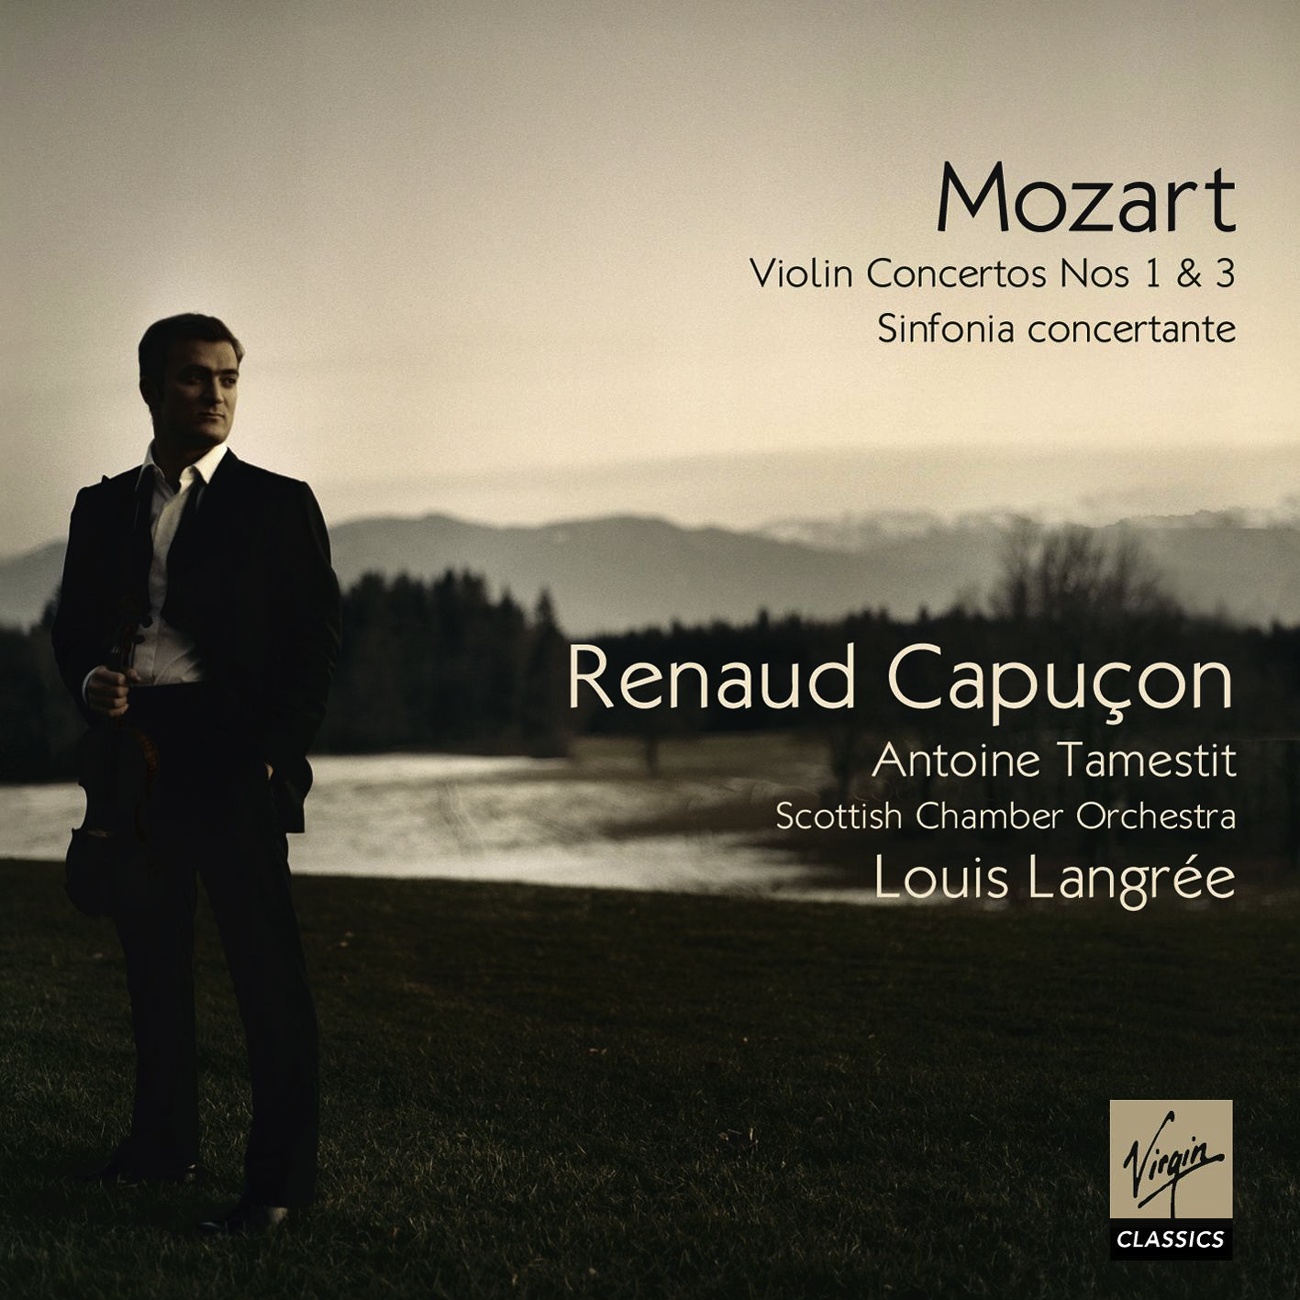 Violin Concerto No.1 K.207 in B flat major:I. Allegro moderato